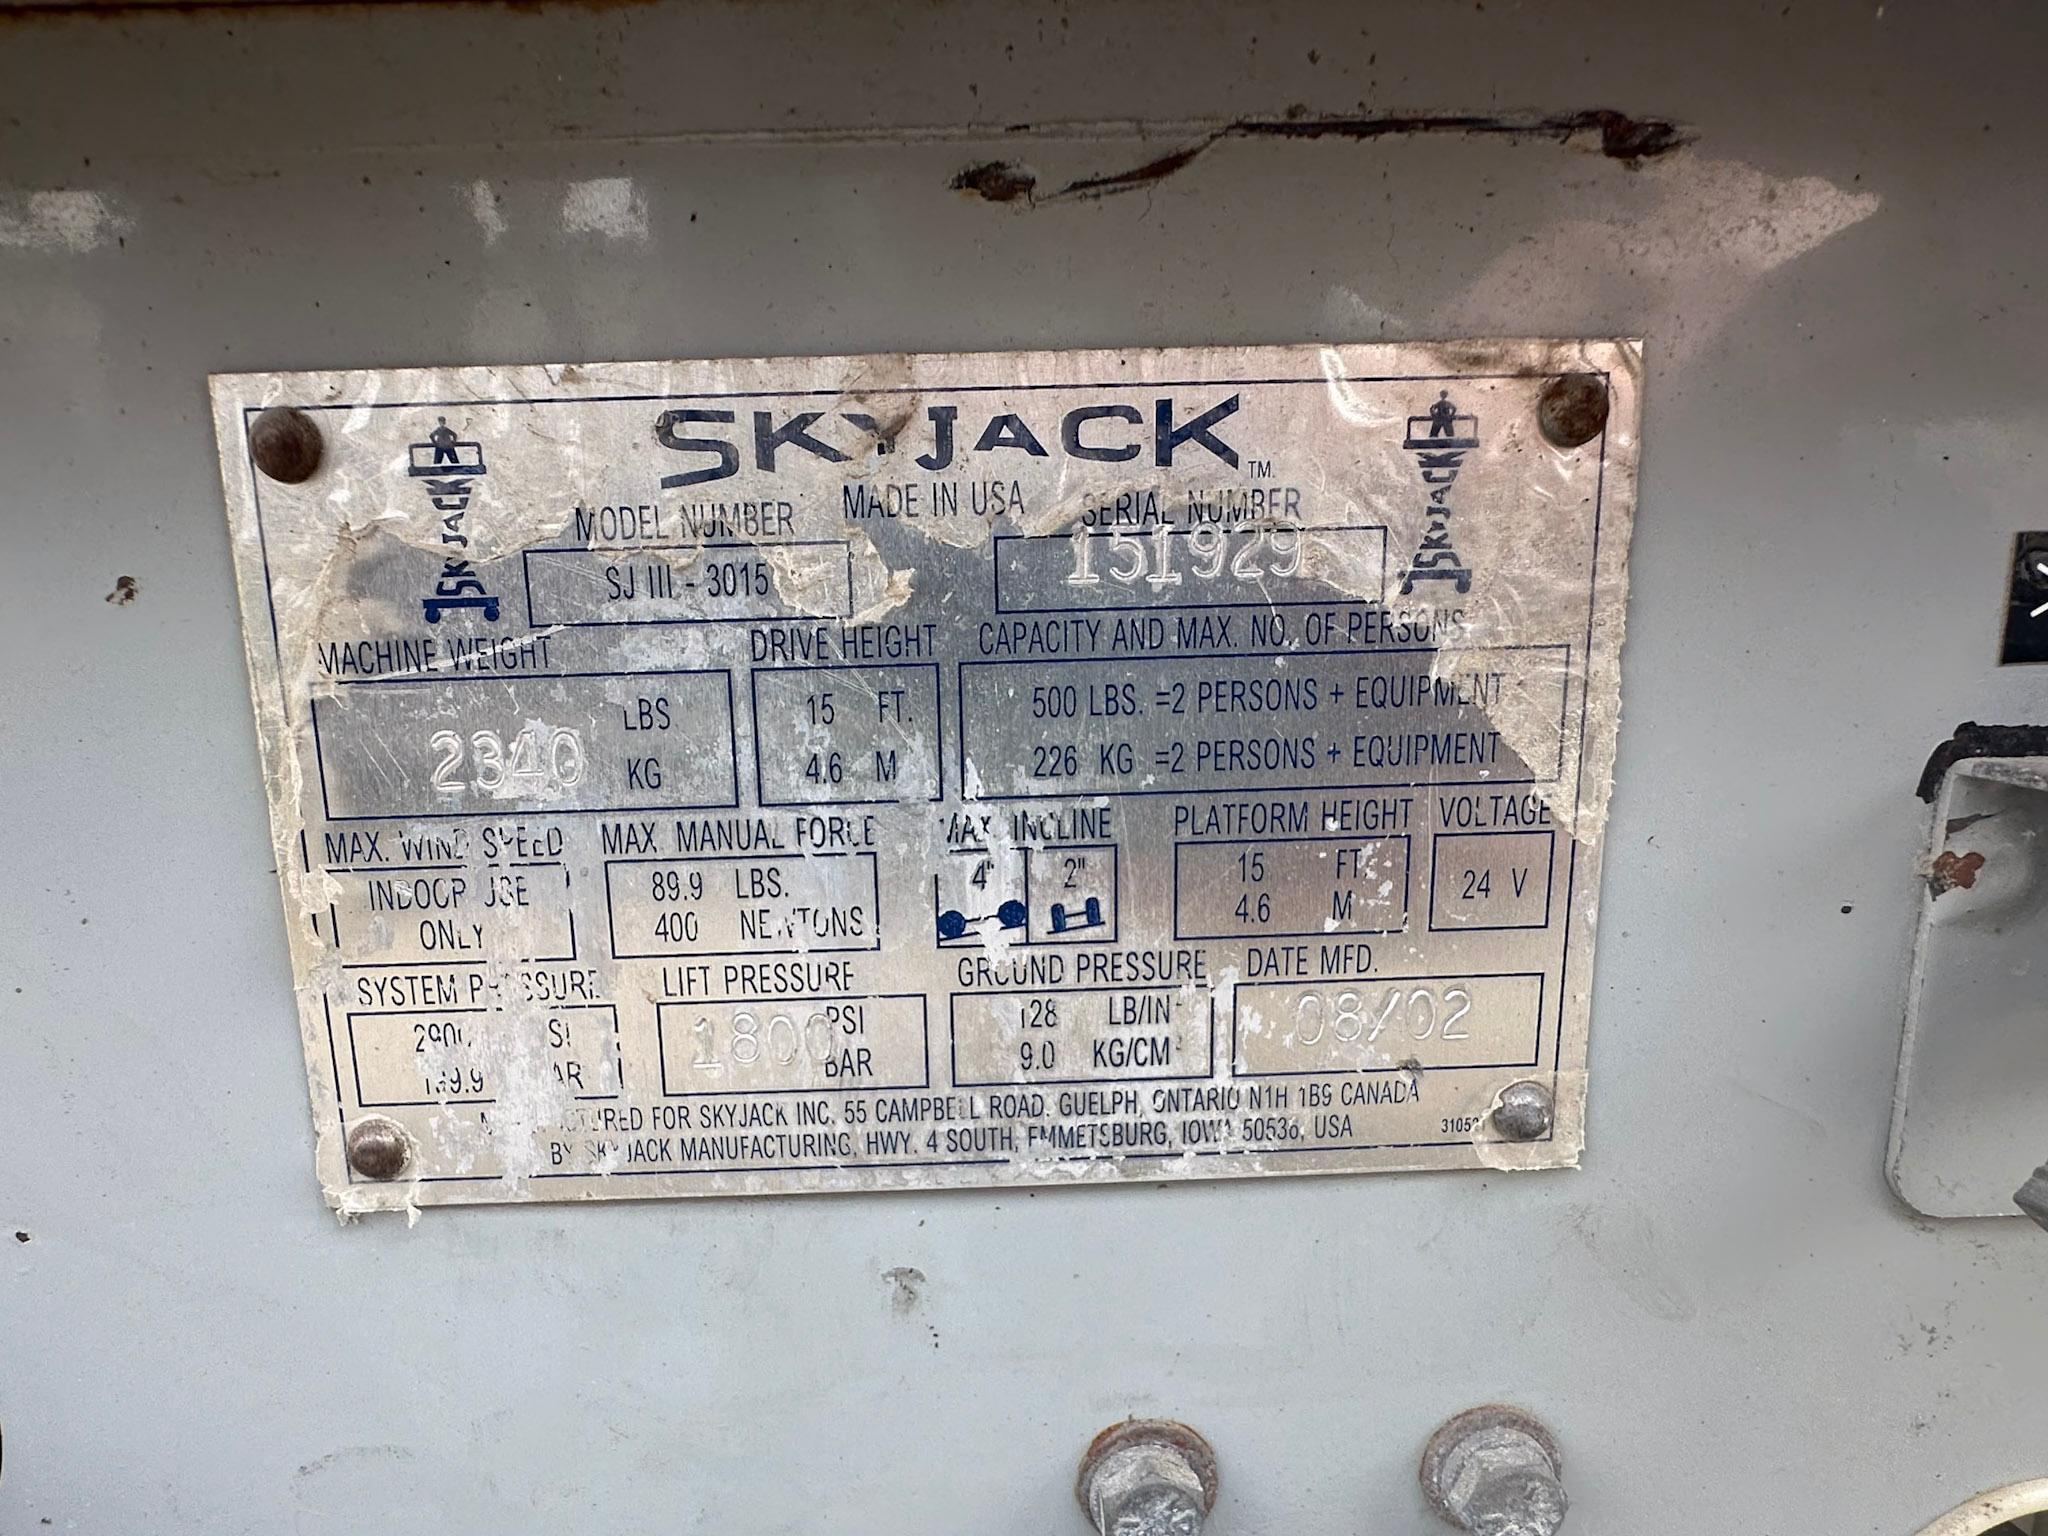 SkyJack SJIII 3015 Scissor Lift